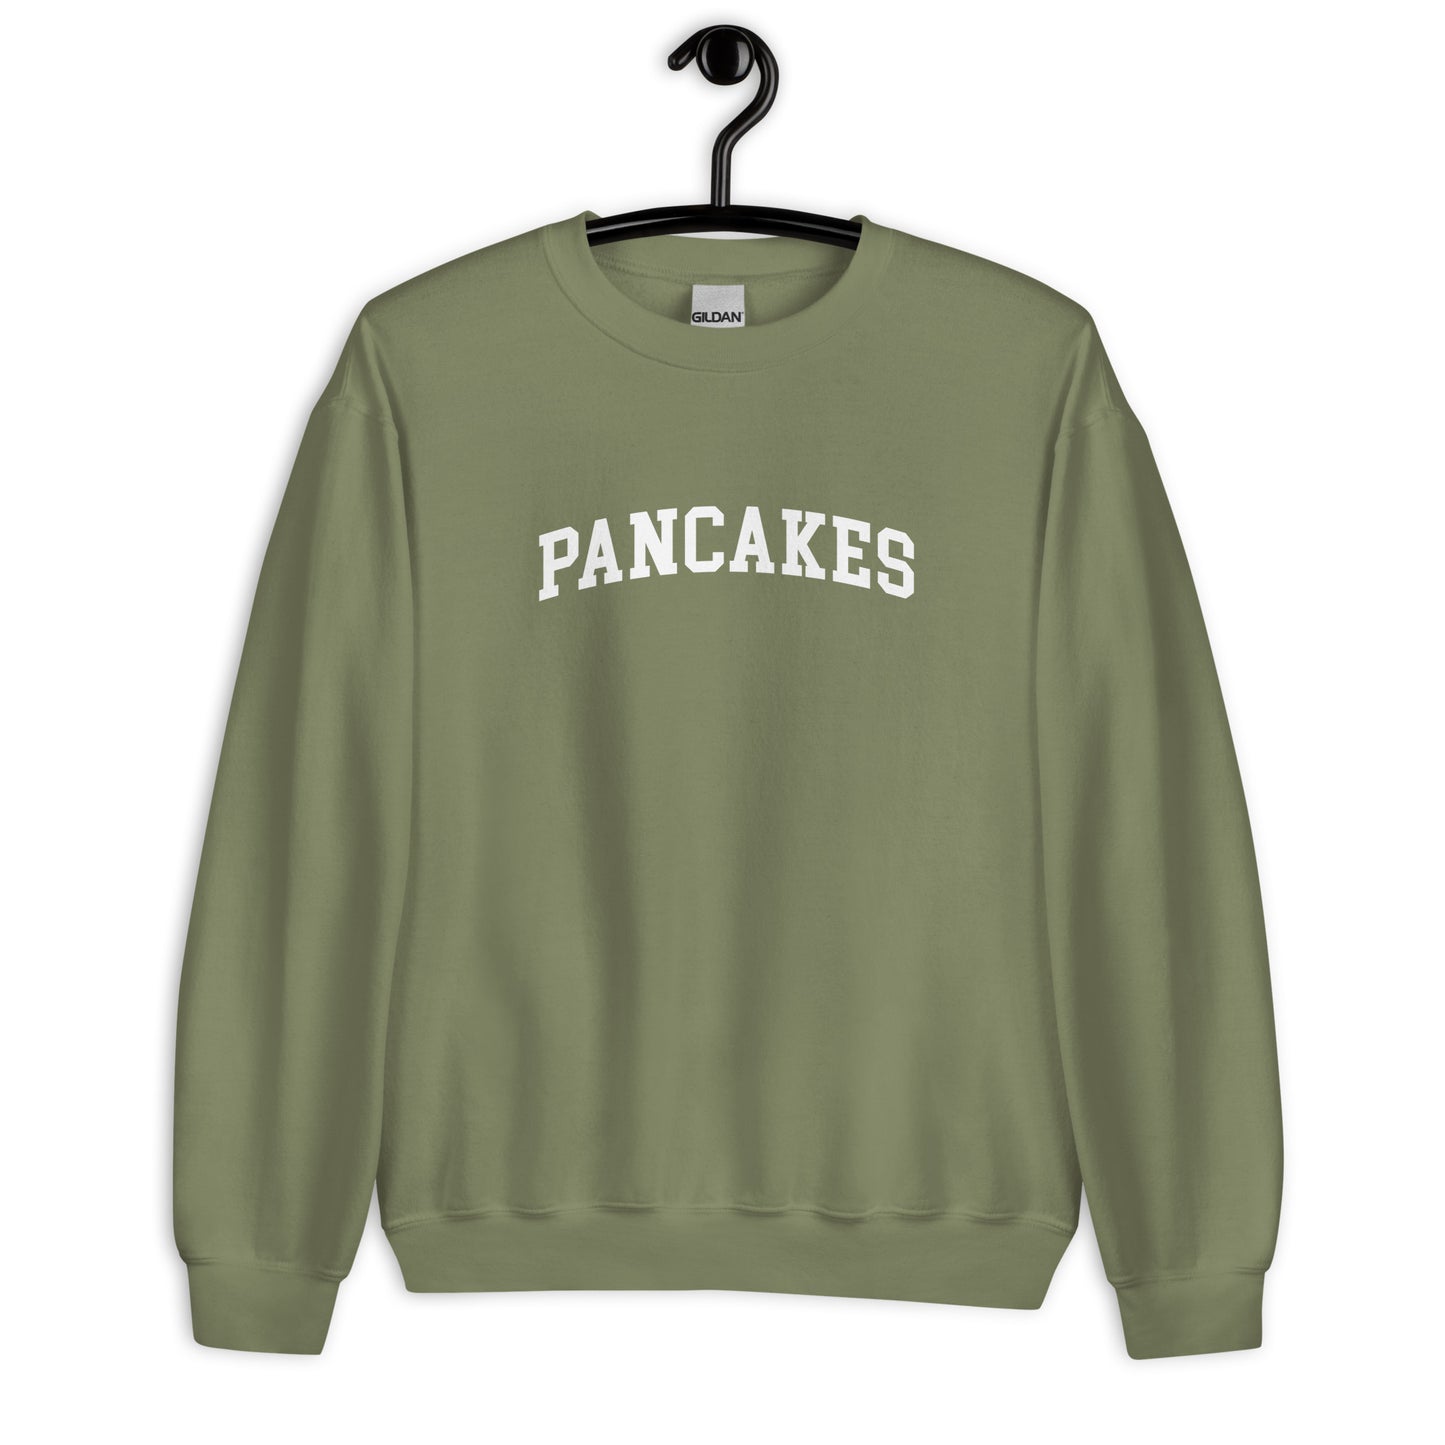 Pancakes Sweatshirt - Arched Font